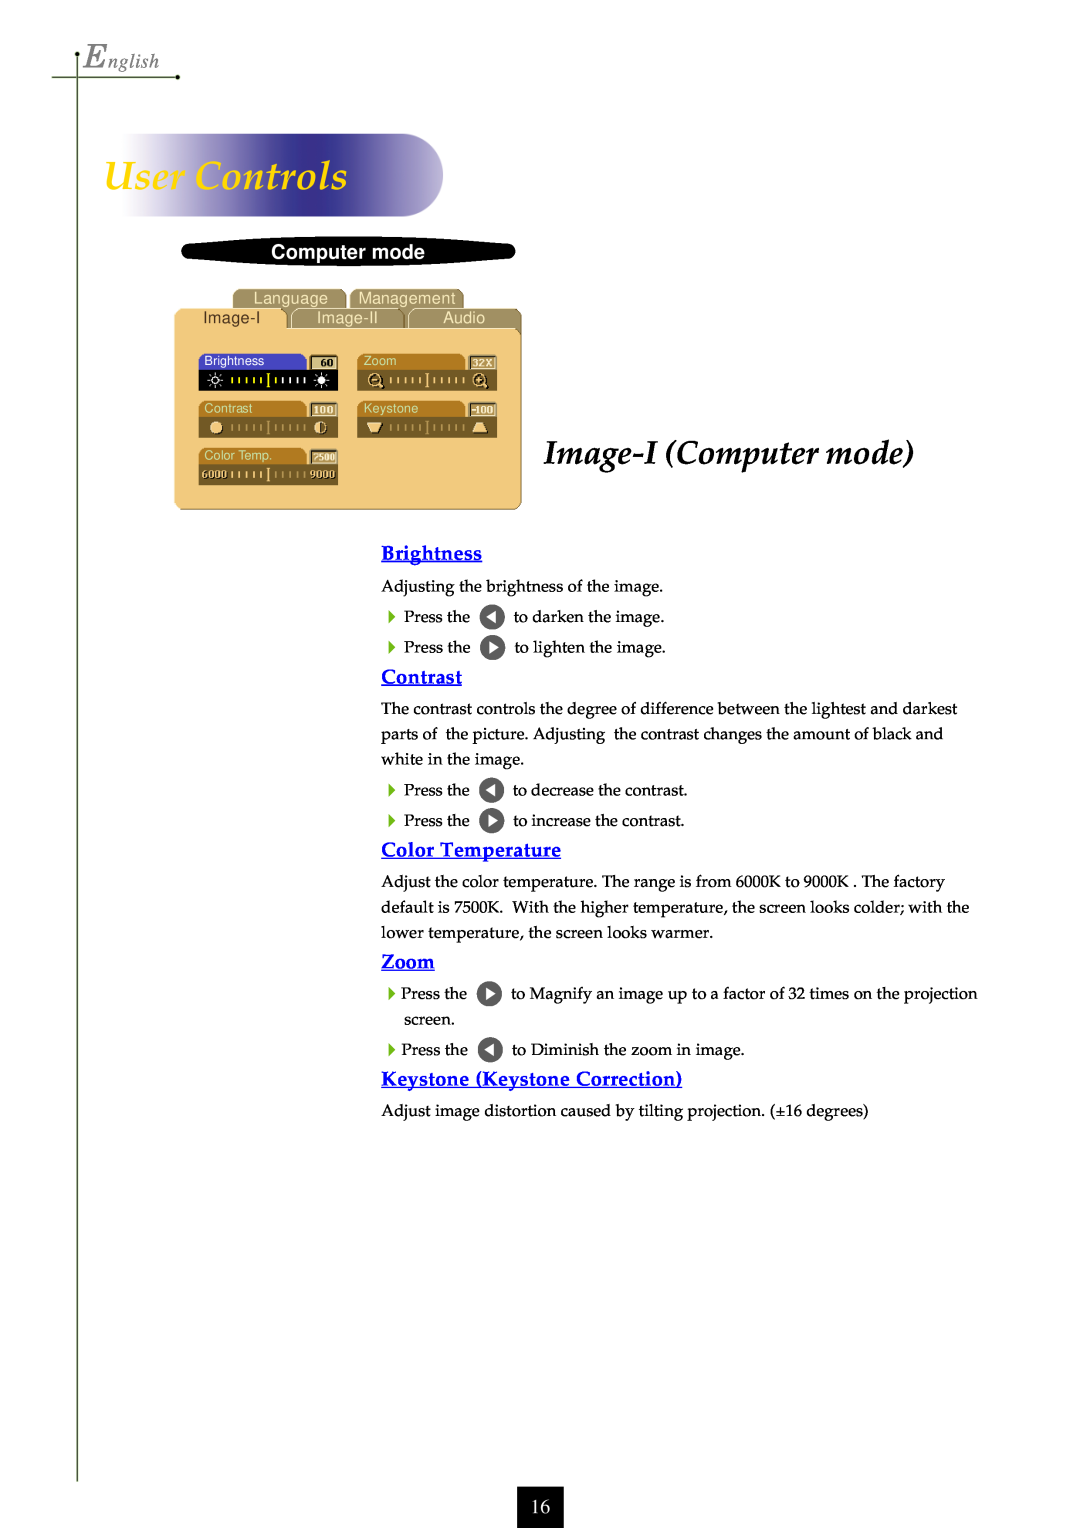 Optoma Technology EP750 Image-I Computer mode, Brightness, Contrast, Color Temperature, Zoom, Keystone Keystone Correction 